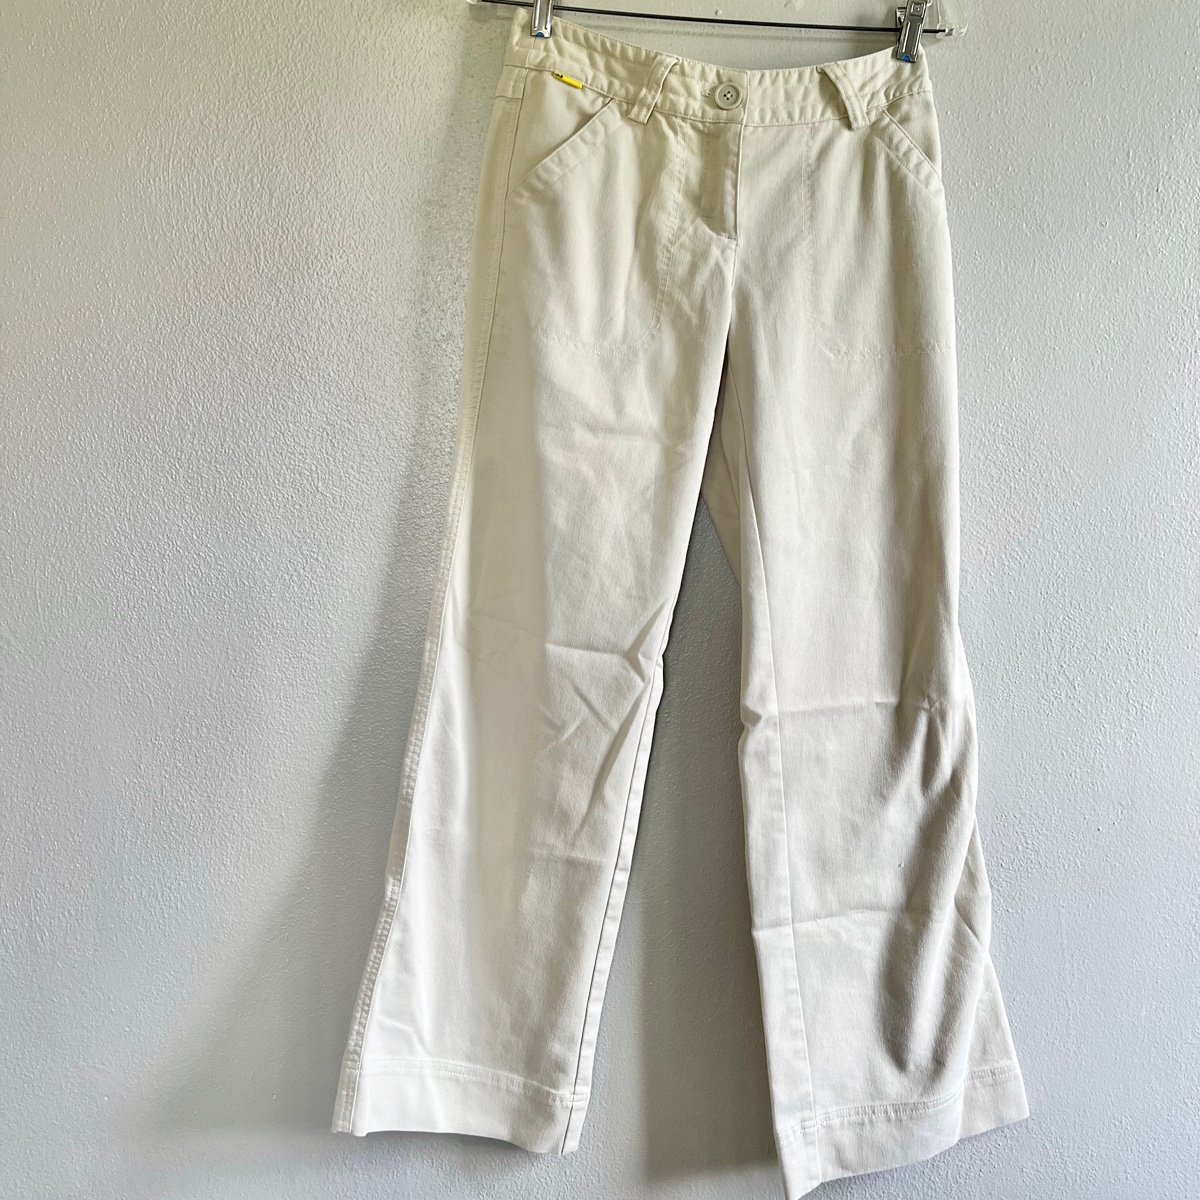 High quality [Lole] Khaki Straight Leg Hiking Pants- Size 6 JYNfJik35 for sale